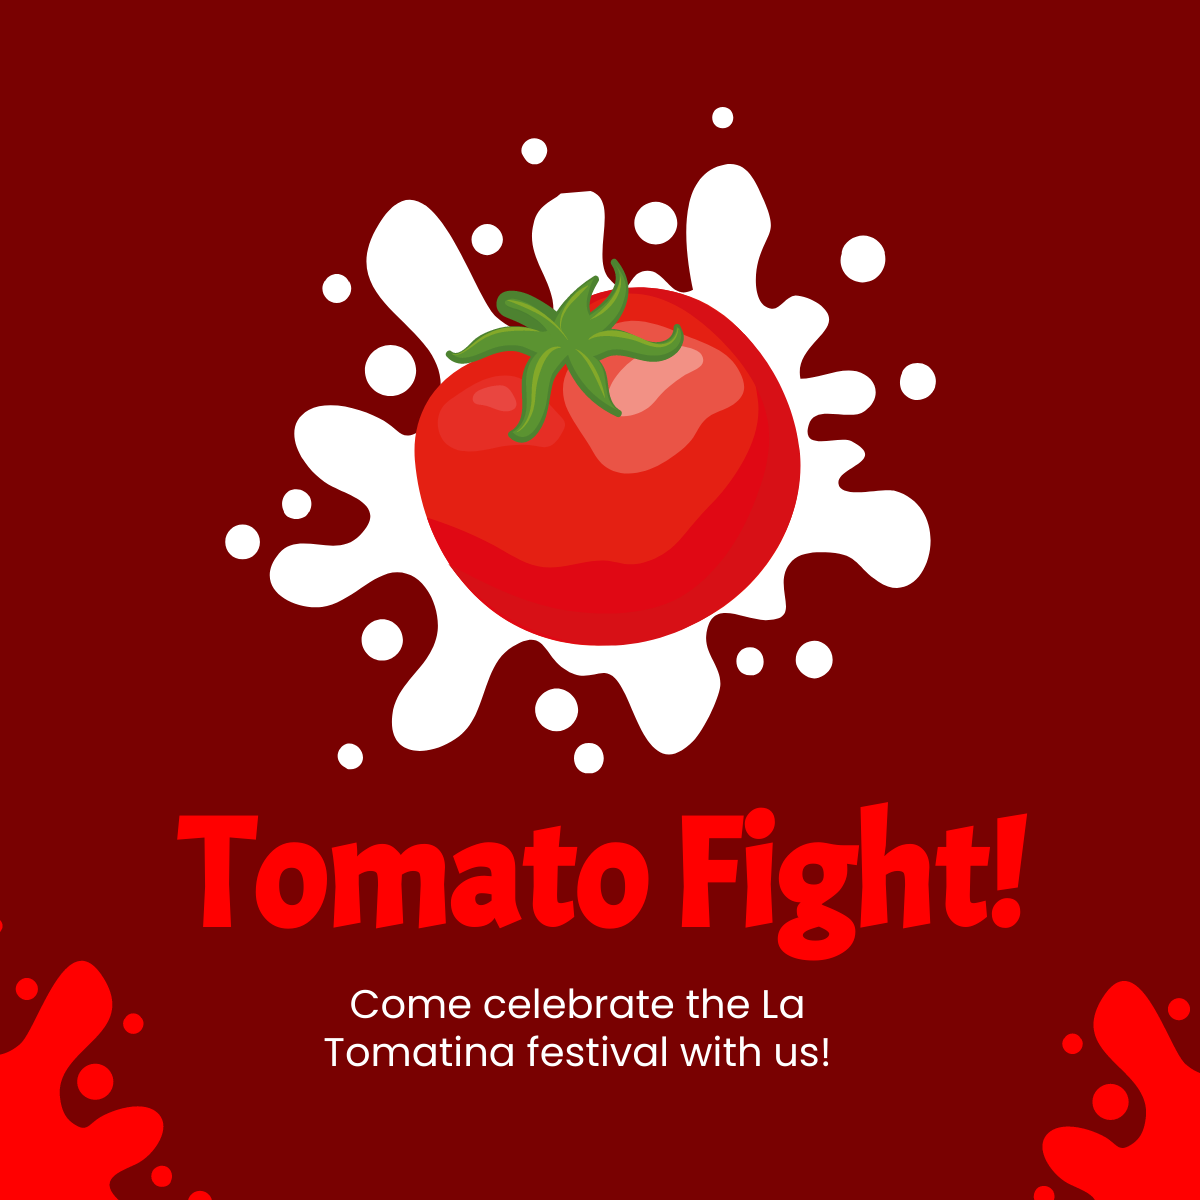 La Tomatina Festival Linkedin Post Template